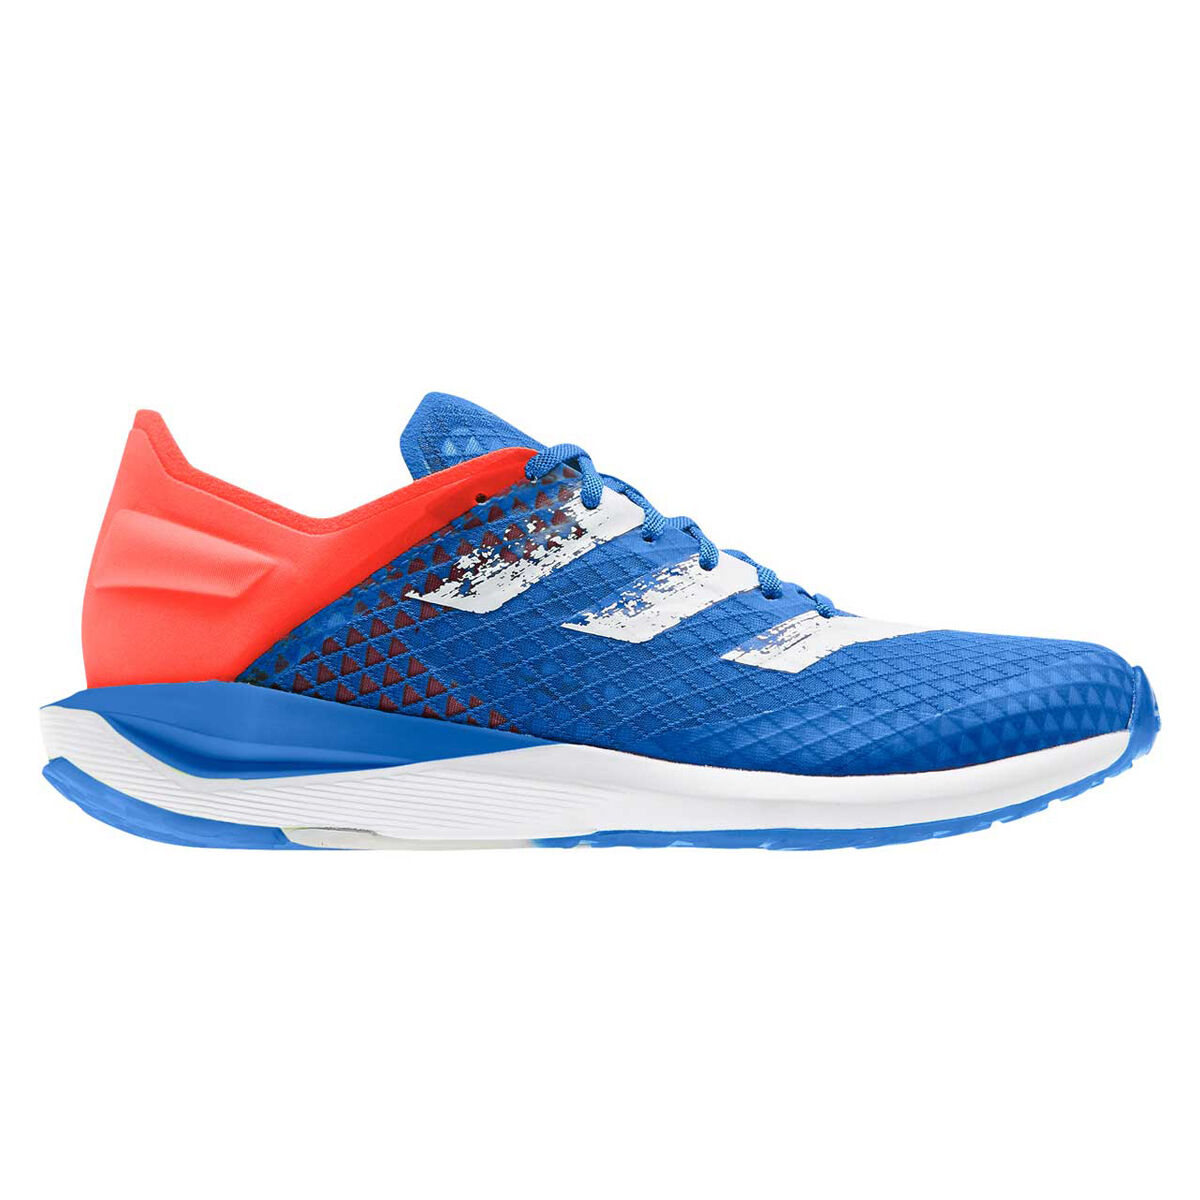 adidas running shoes blue and orange